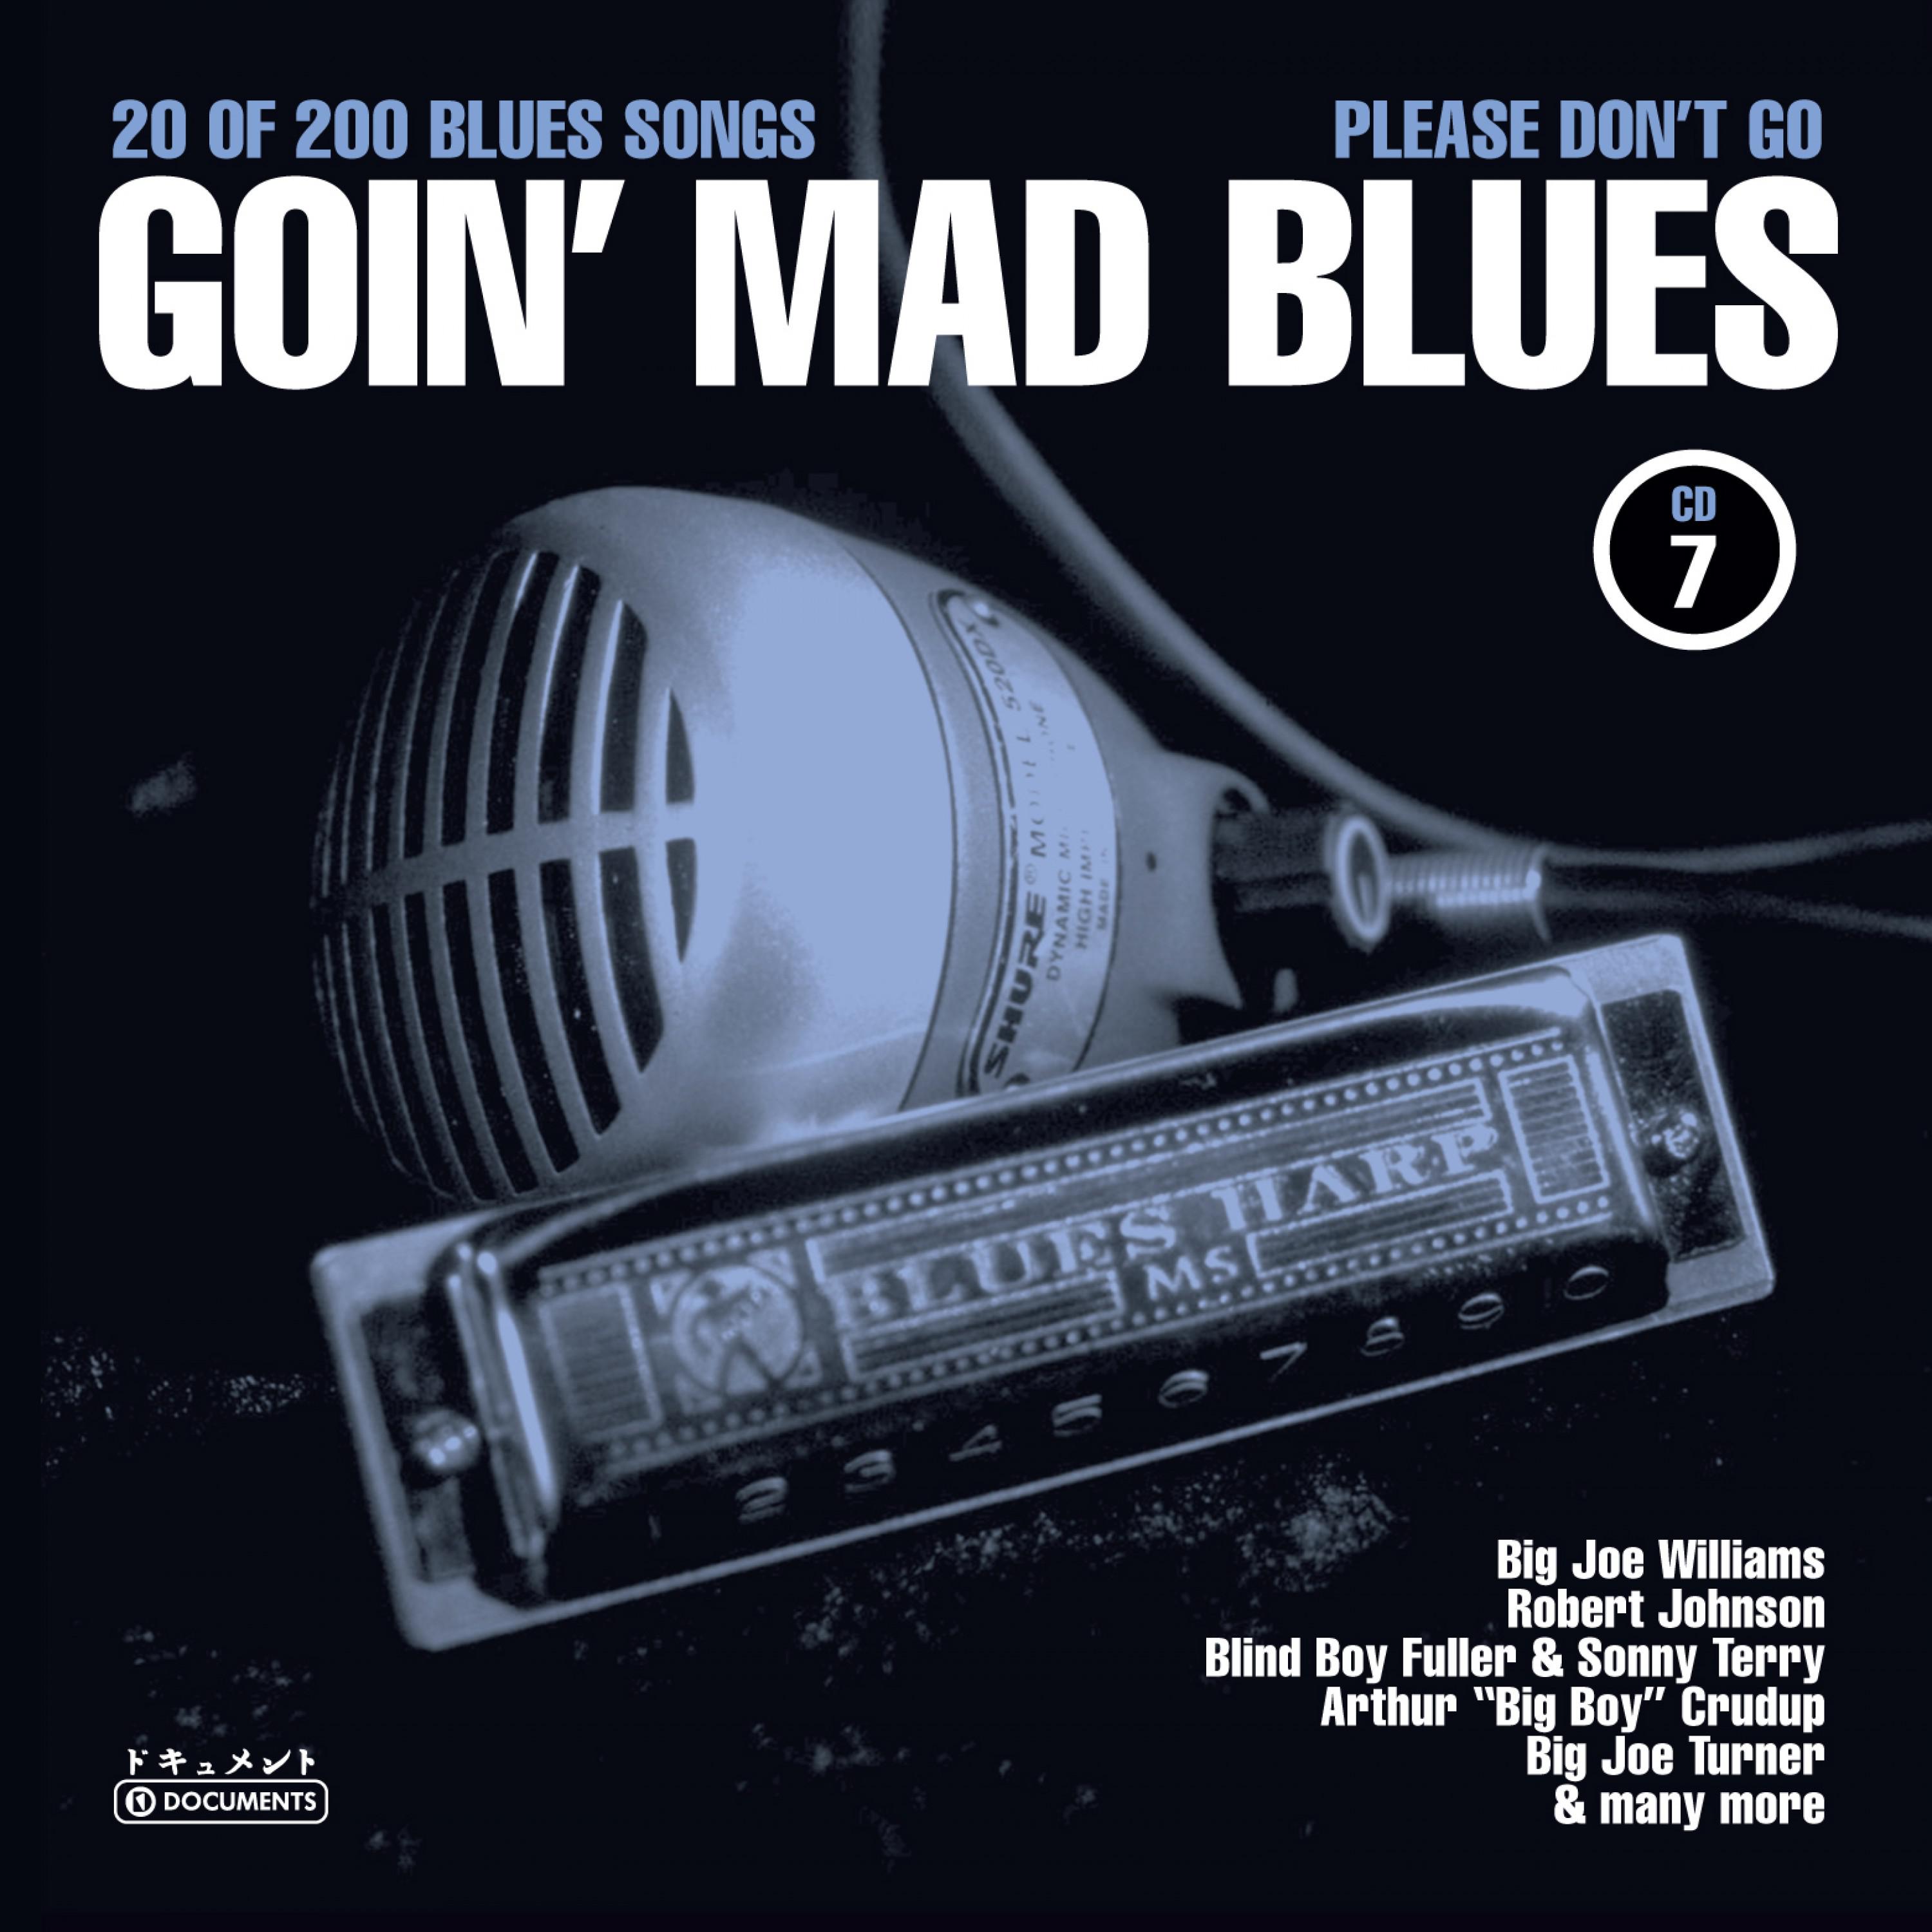 Goin' Mad Blues Vol. 7